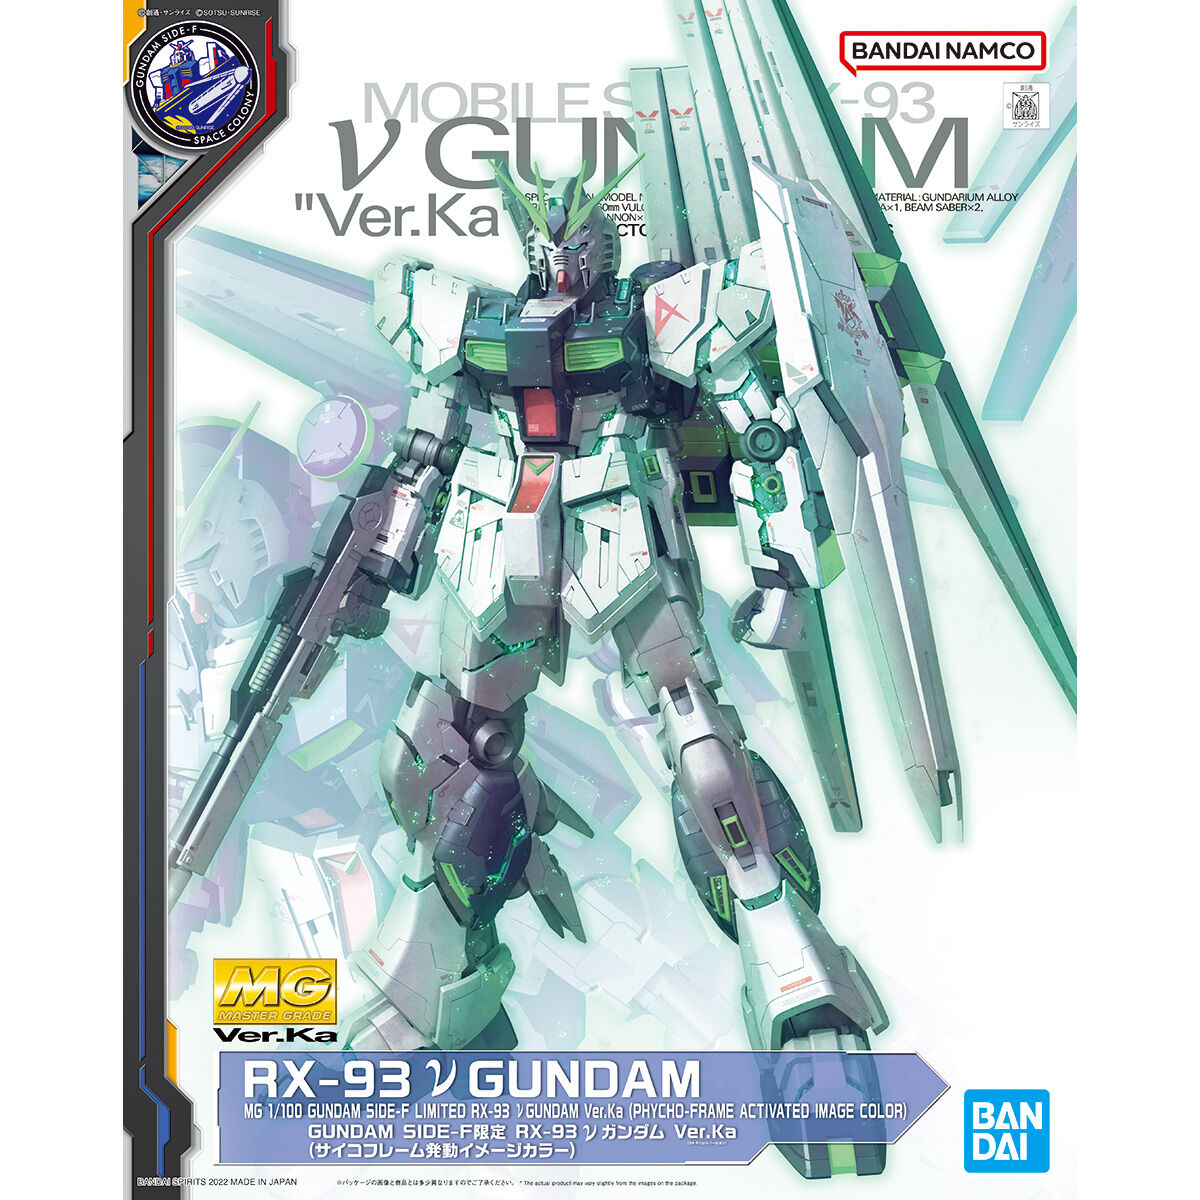 GUNDAM SIDE-F Limited MG 1/100 RX-93 νGundam Ver.Ka (Psychoframe activation image color)